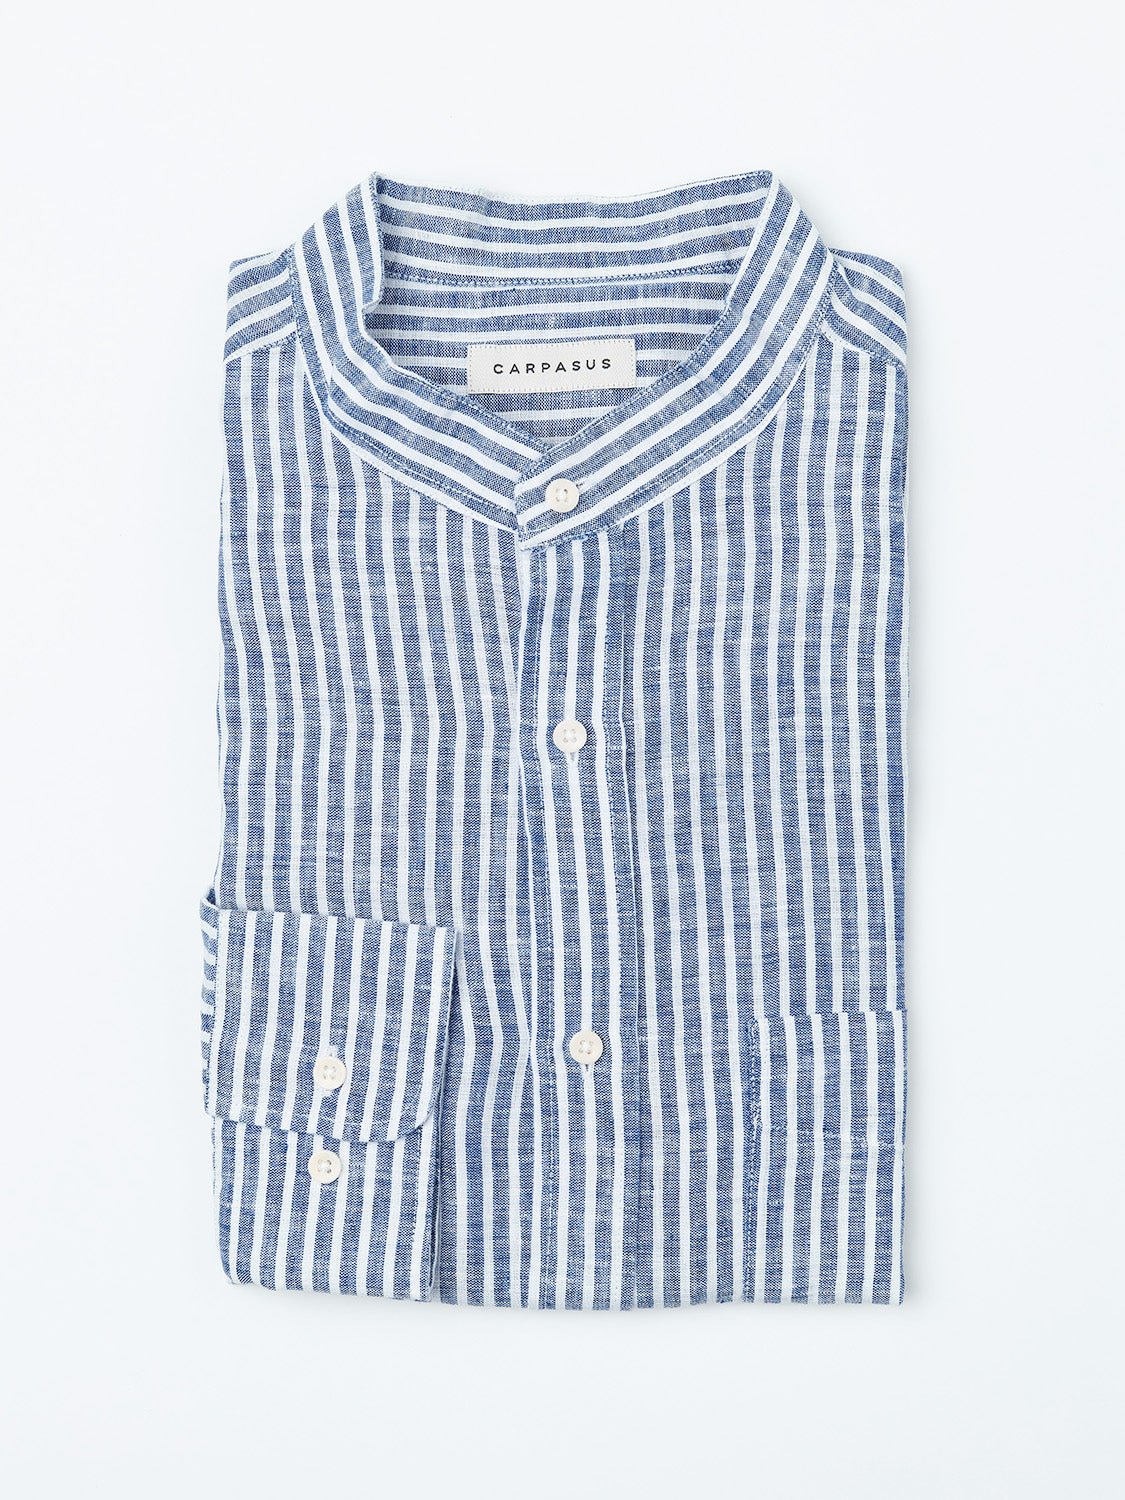 carpasus sustainable organic linen shirt lisbon stripes blue white. Nachhaltiges Carpasus Hemd Lisbon Streifen Blau Weiss aus Bio Leinen 